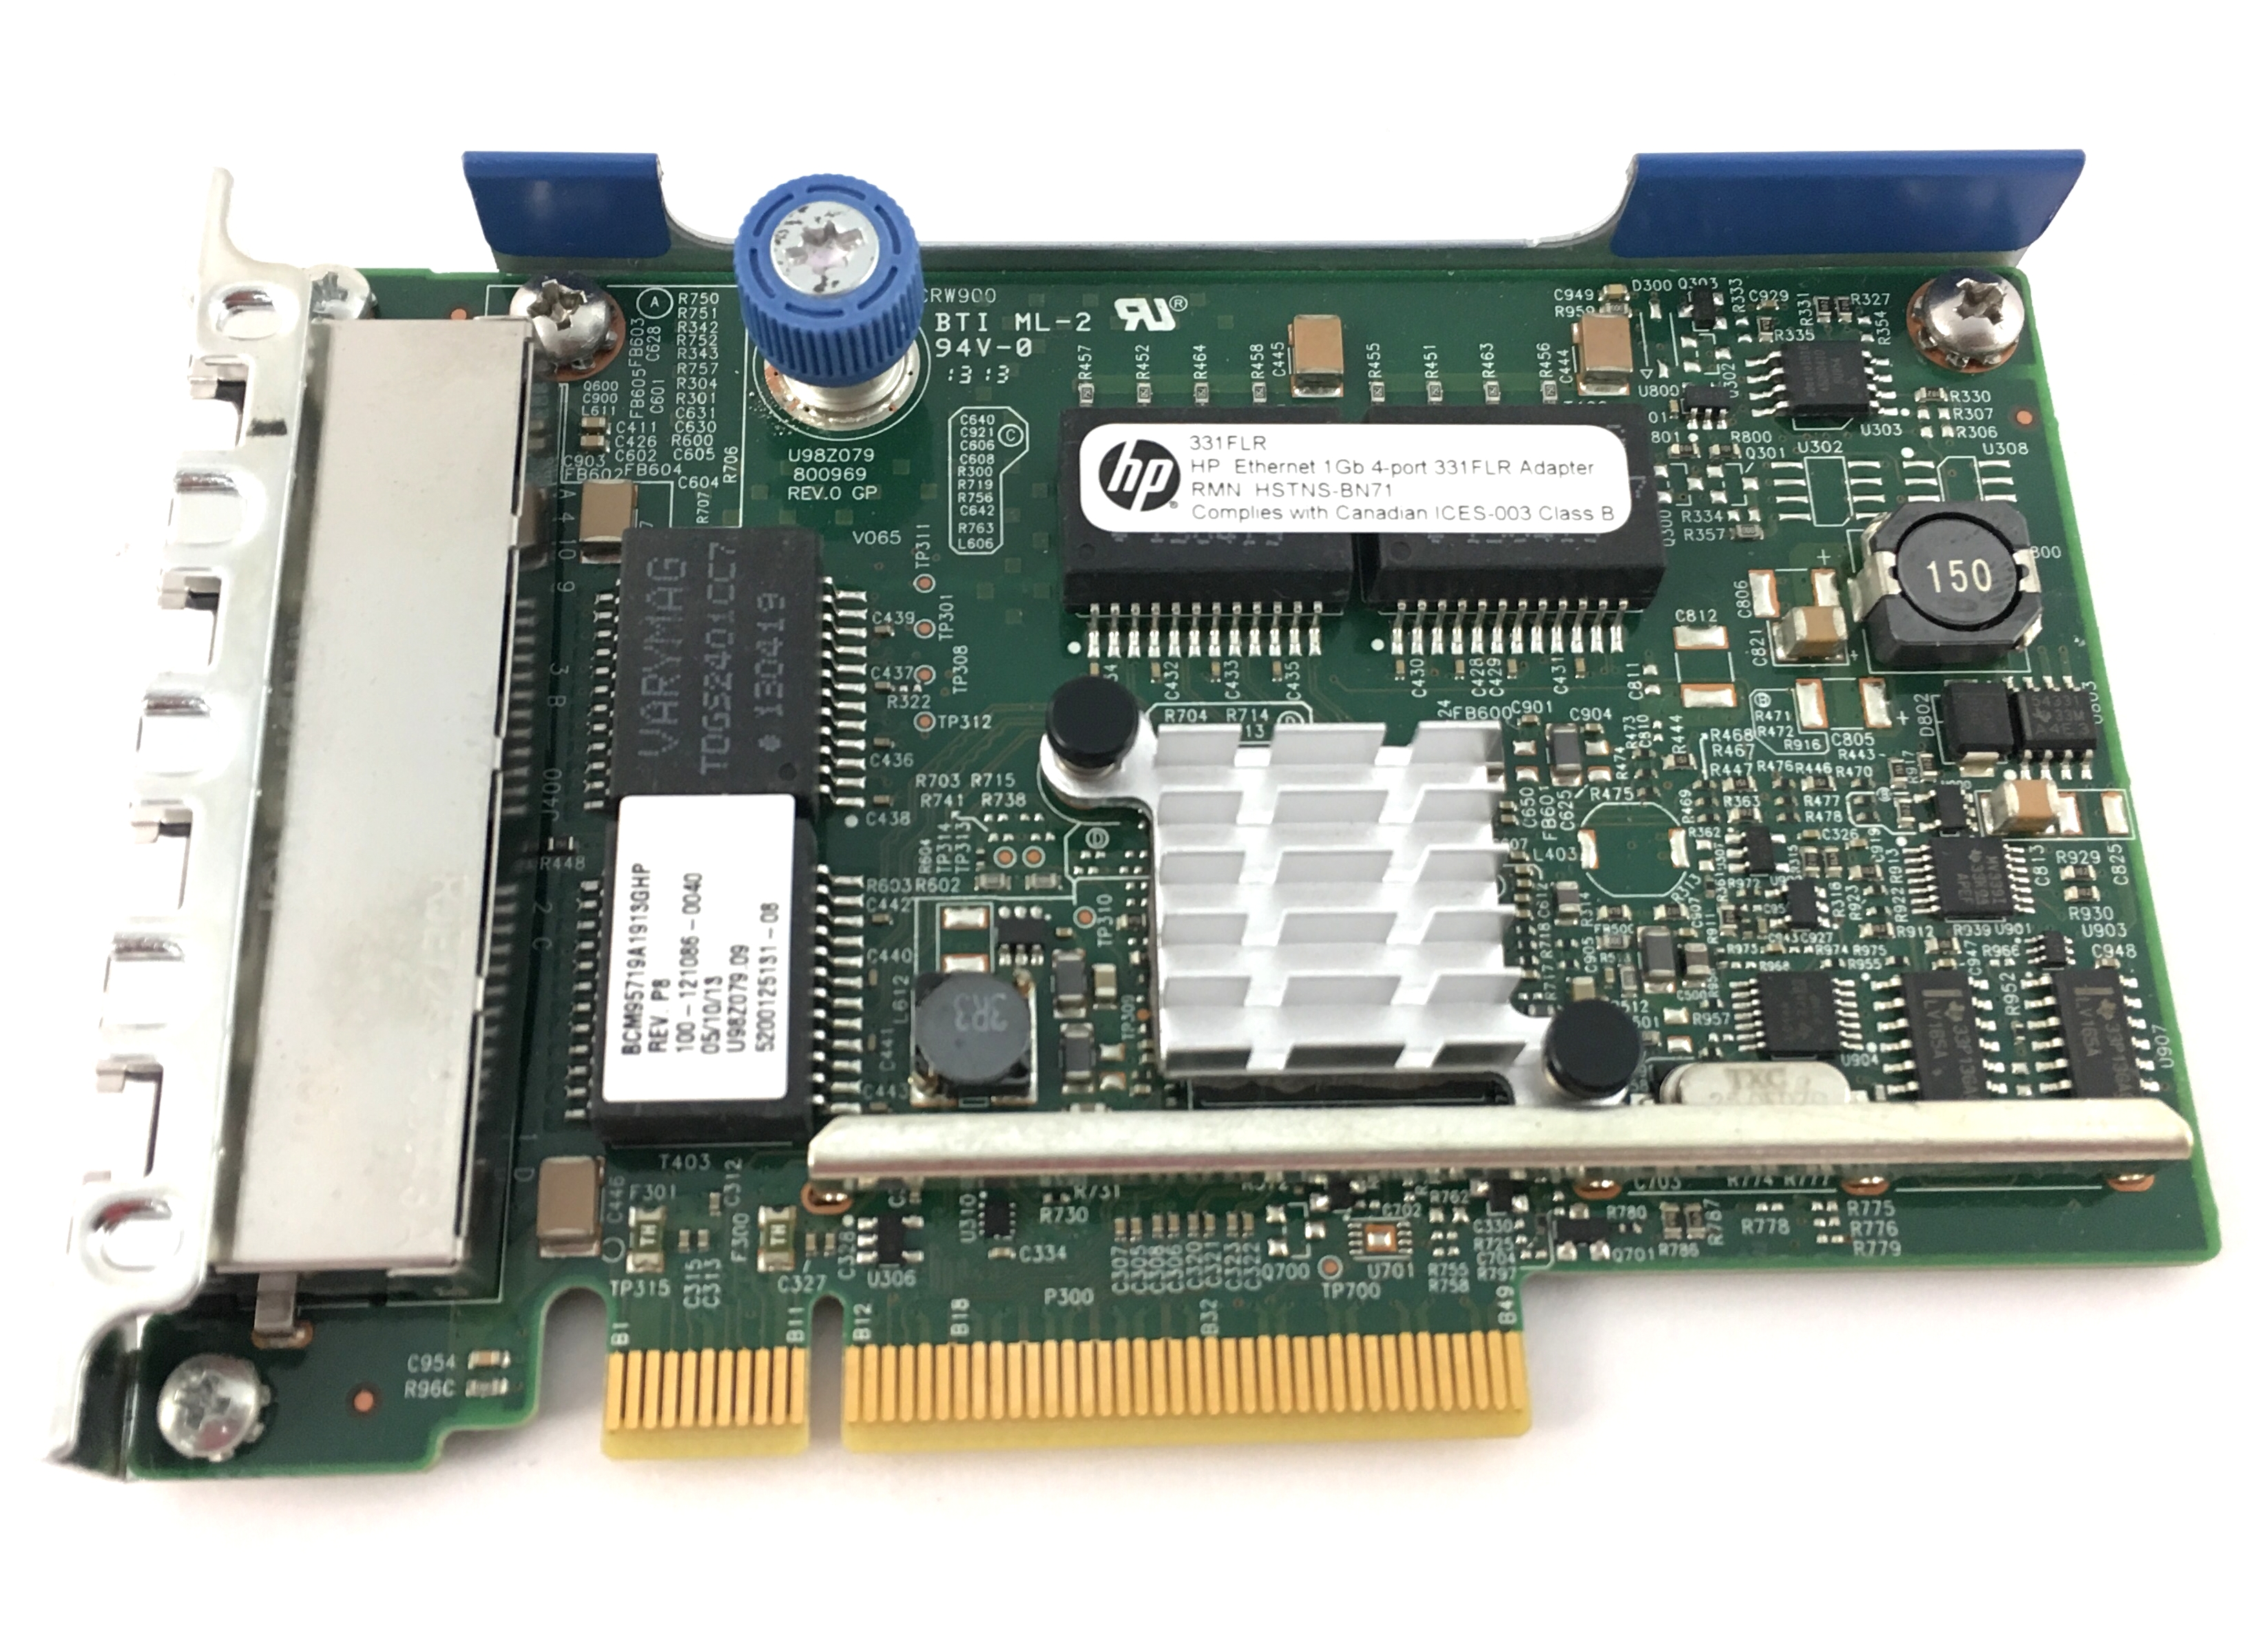 HP 331FLR 1GB 4-Port Ethernet Adapter 789897-001 (634025-001)